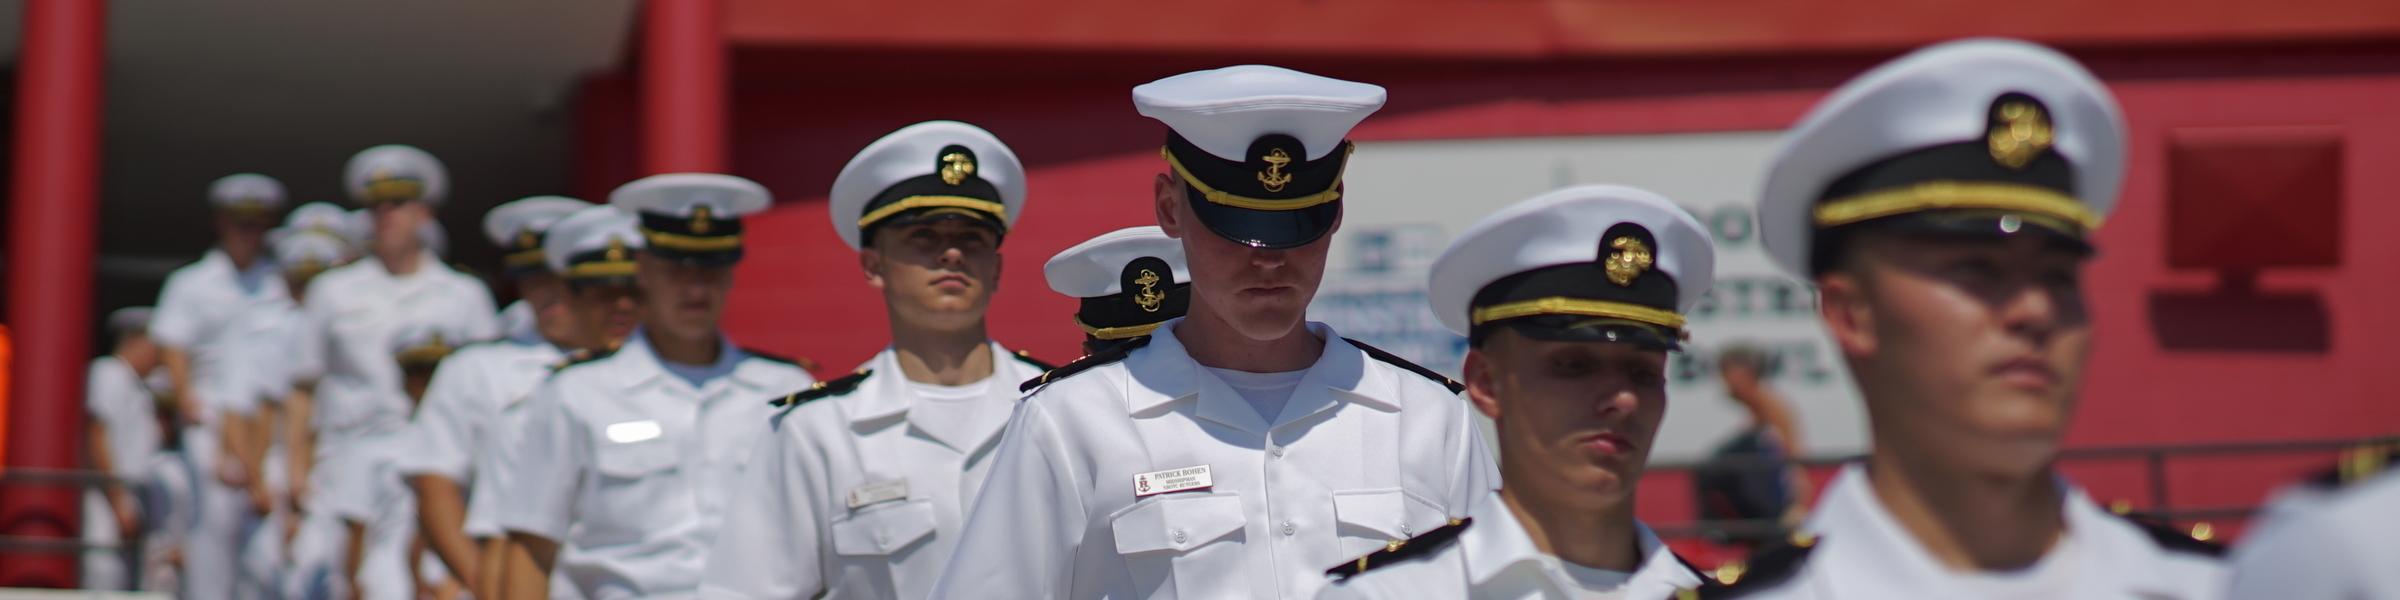 Midshipmen at Military Appreciation Game 2018